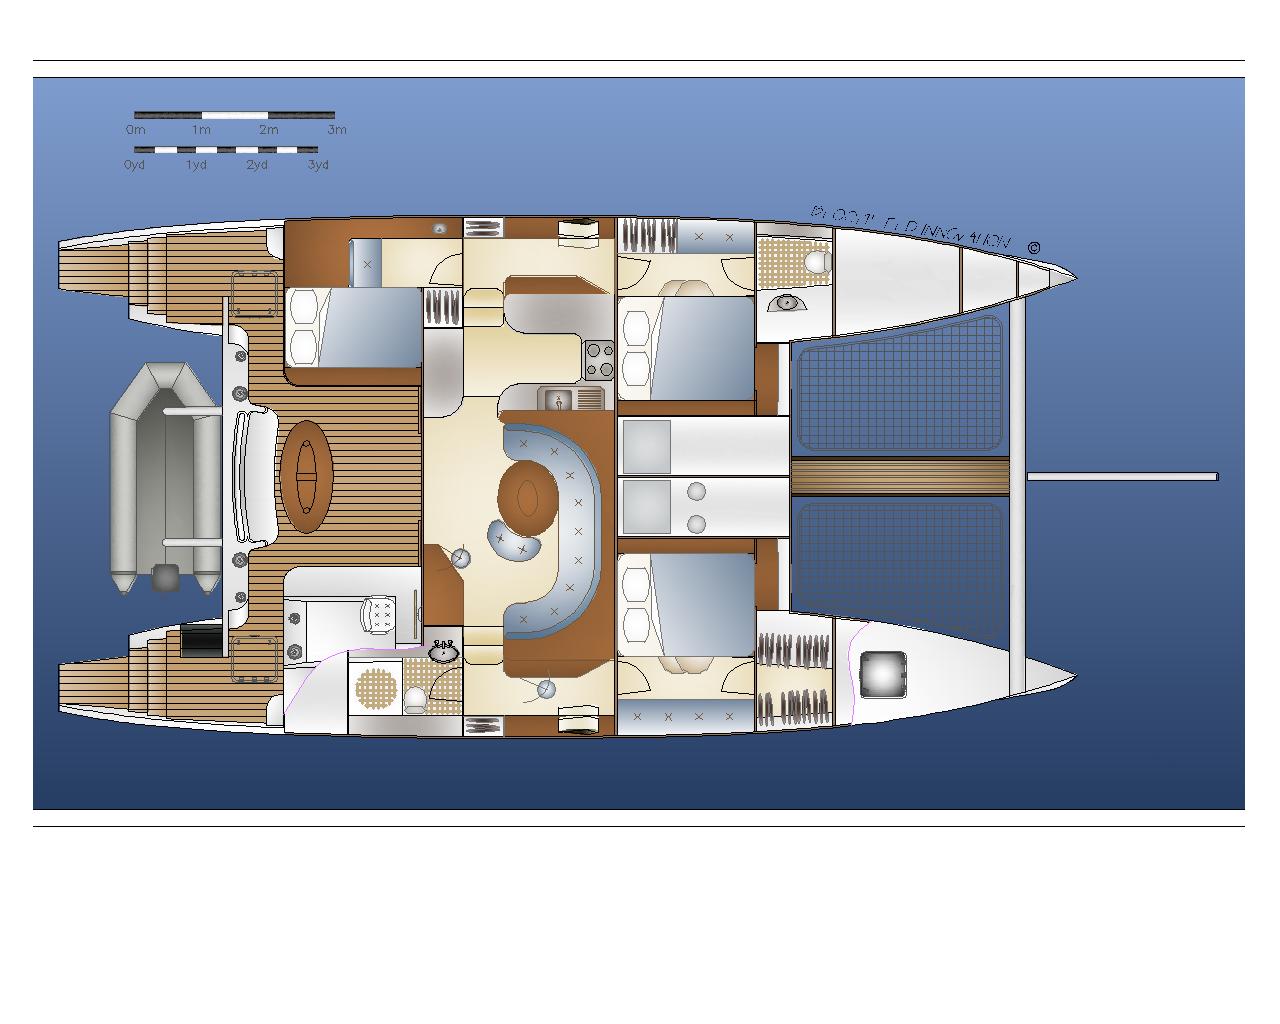 50' Cruising Catamaran (Crowther 591) - Multihull Sailboats - Designs ...